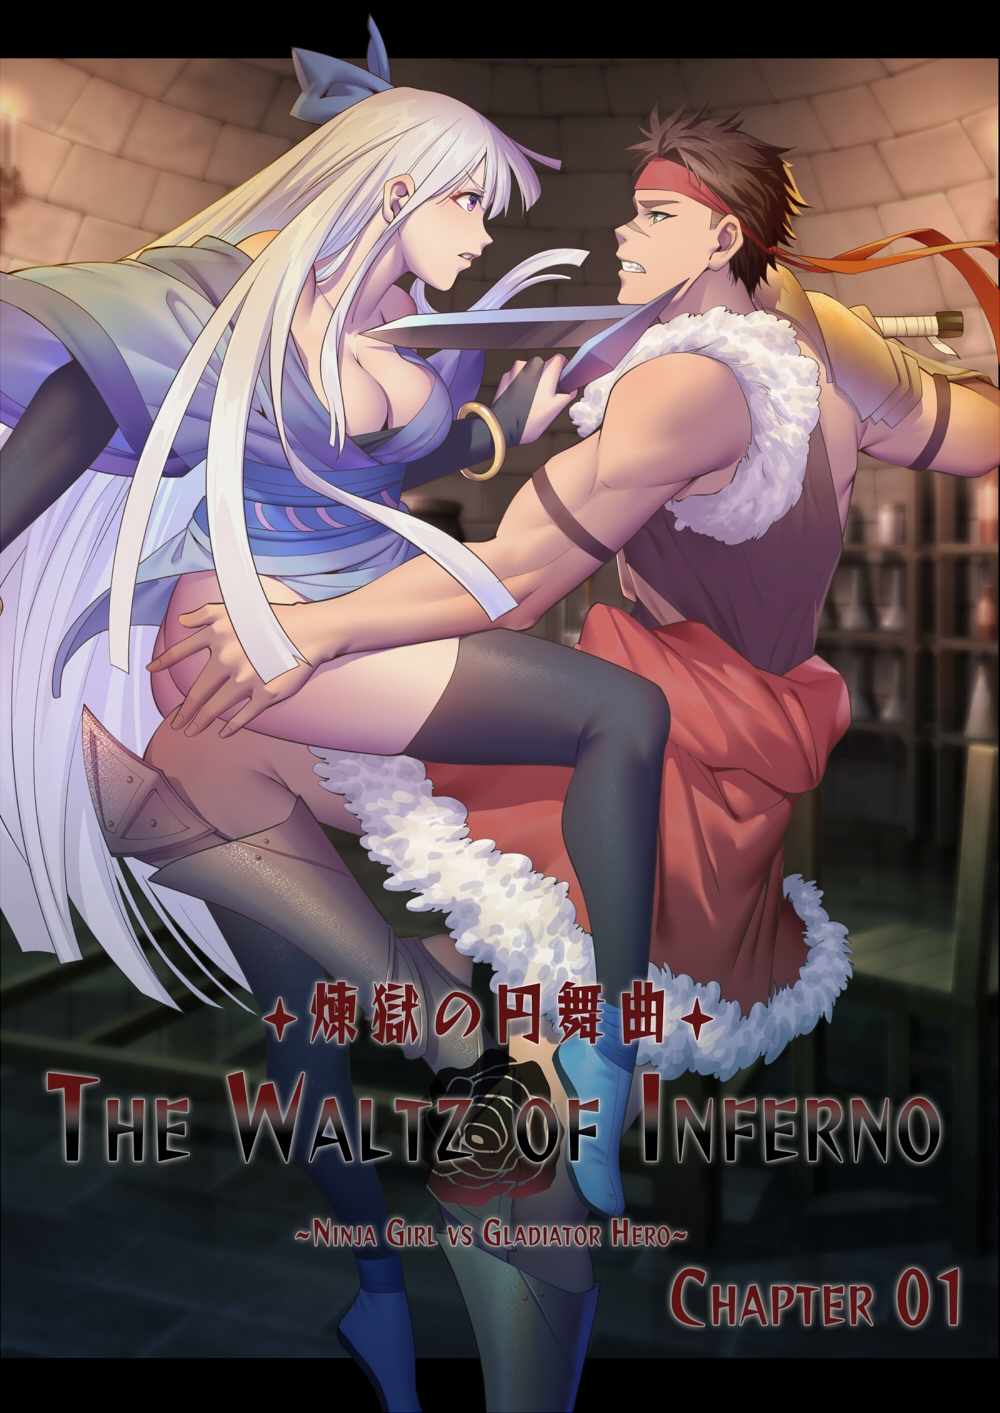 The Waltz of Inferno 煉獄の円舞曲 第1話 角闘の英雄・クロディヤVS女刺客・氷華